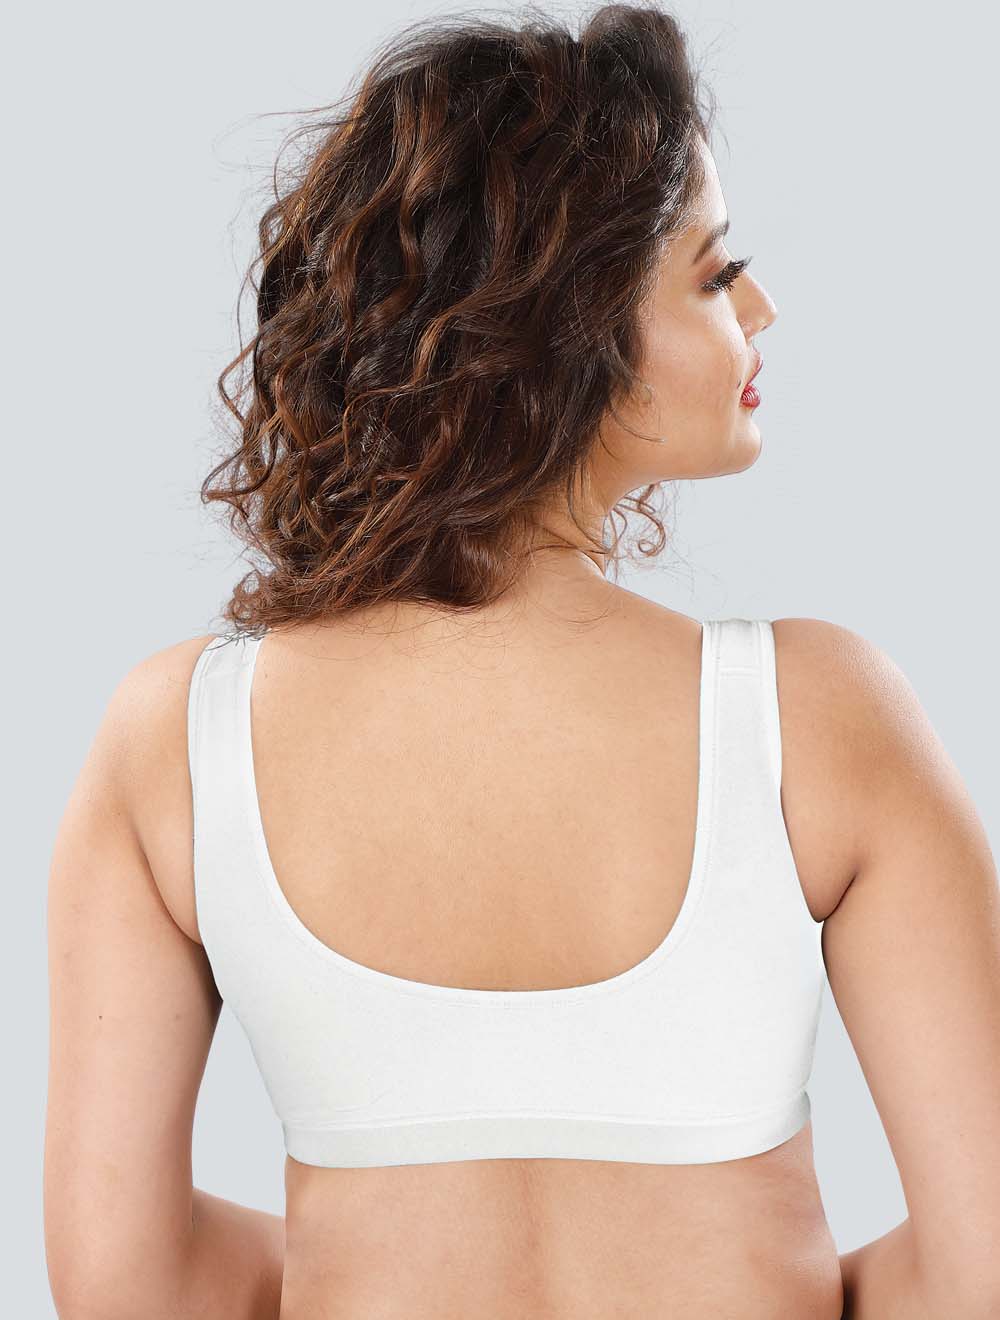 Dropship Dermawear Women's Sports Brassiere (Model: SB-1103, Color:Dark  Grey, Material: 4D Stretch)-PID1075